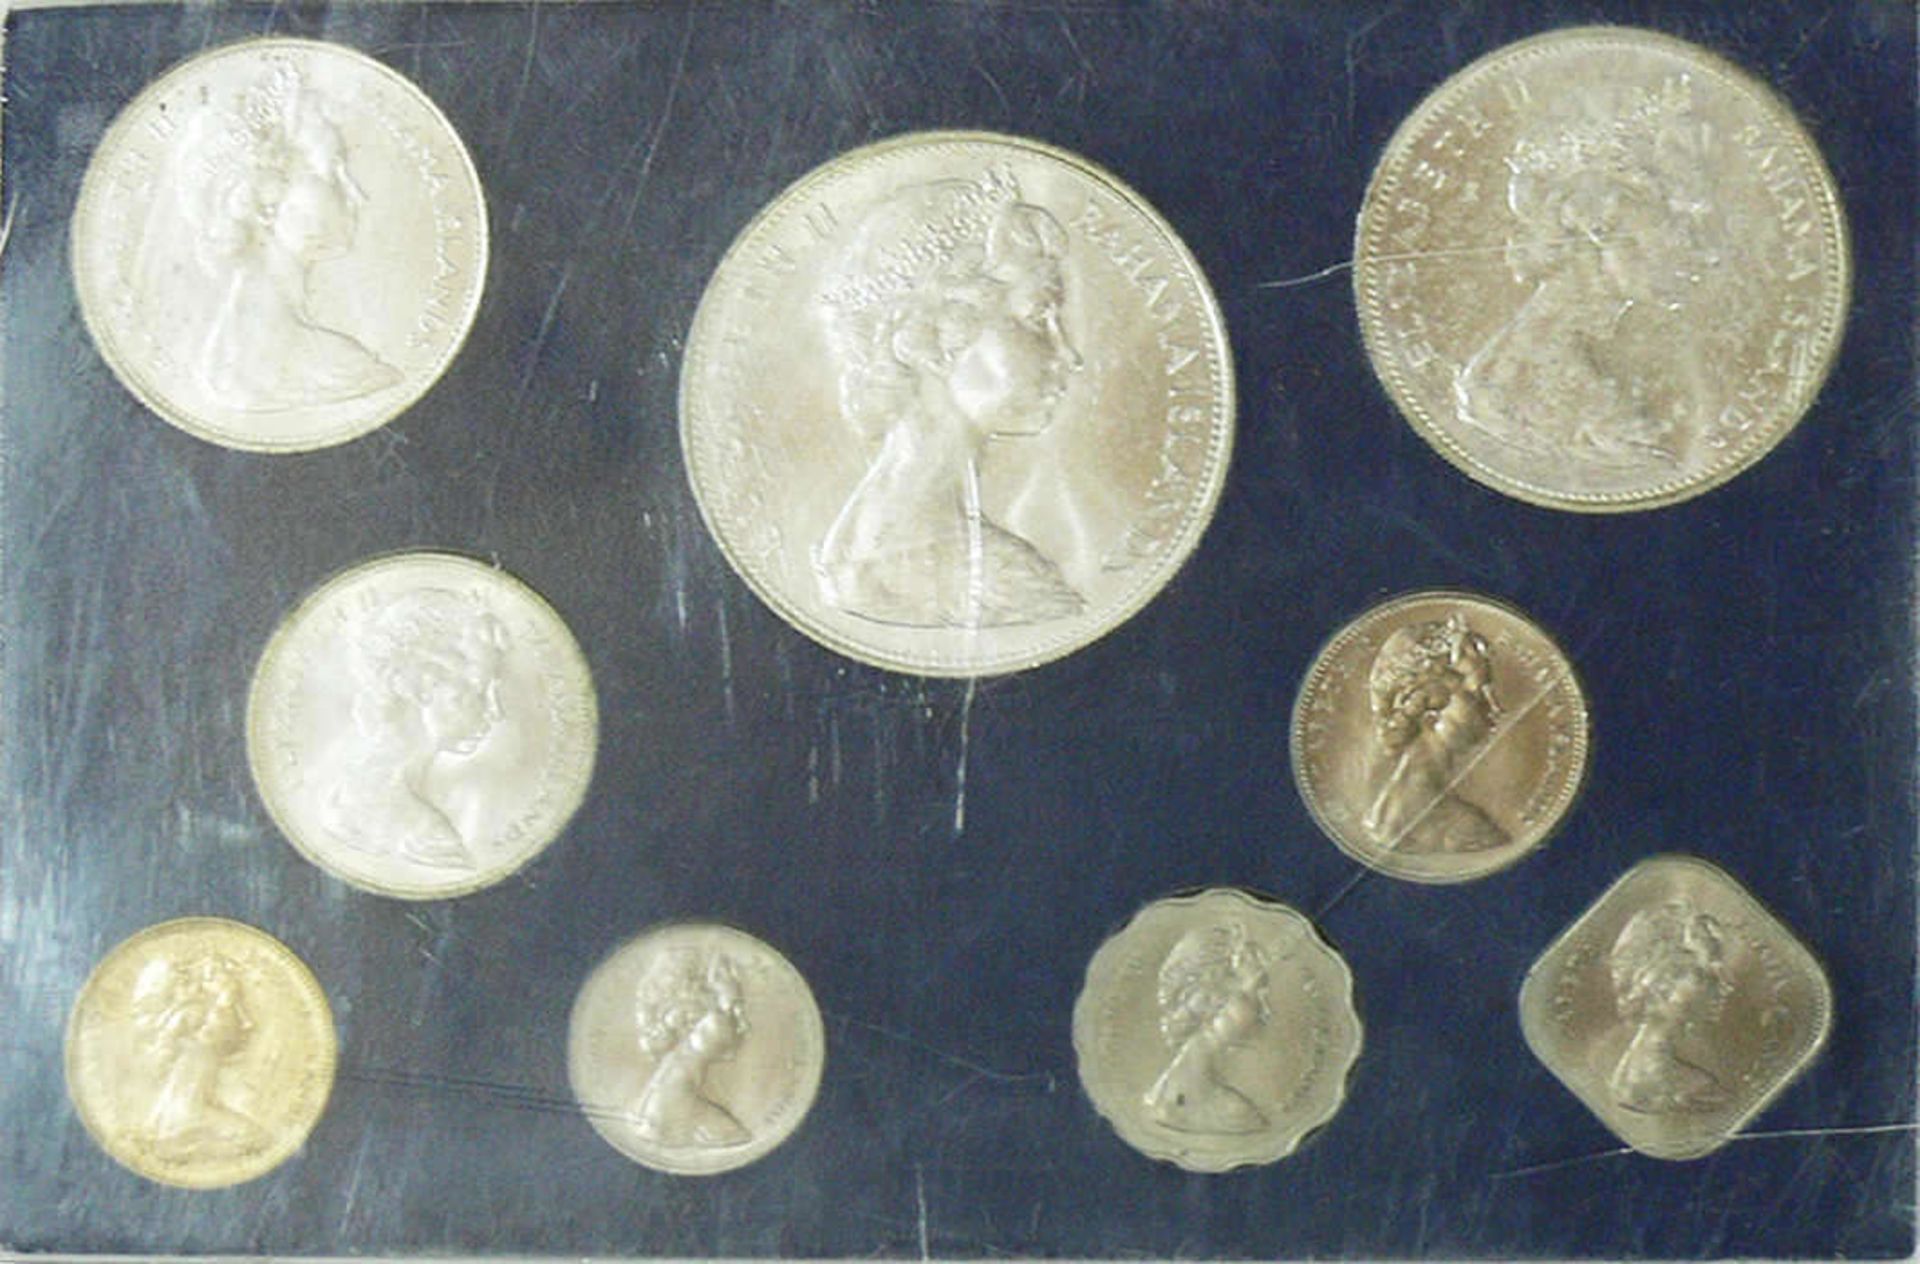 Bahamas 1969, Kursmünzsatz. Erhaltung: stgl. Bahamas 1969 coinset. Condition: BU. - Bild 2 aus 2